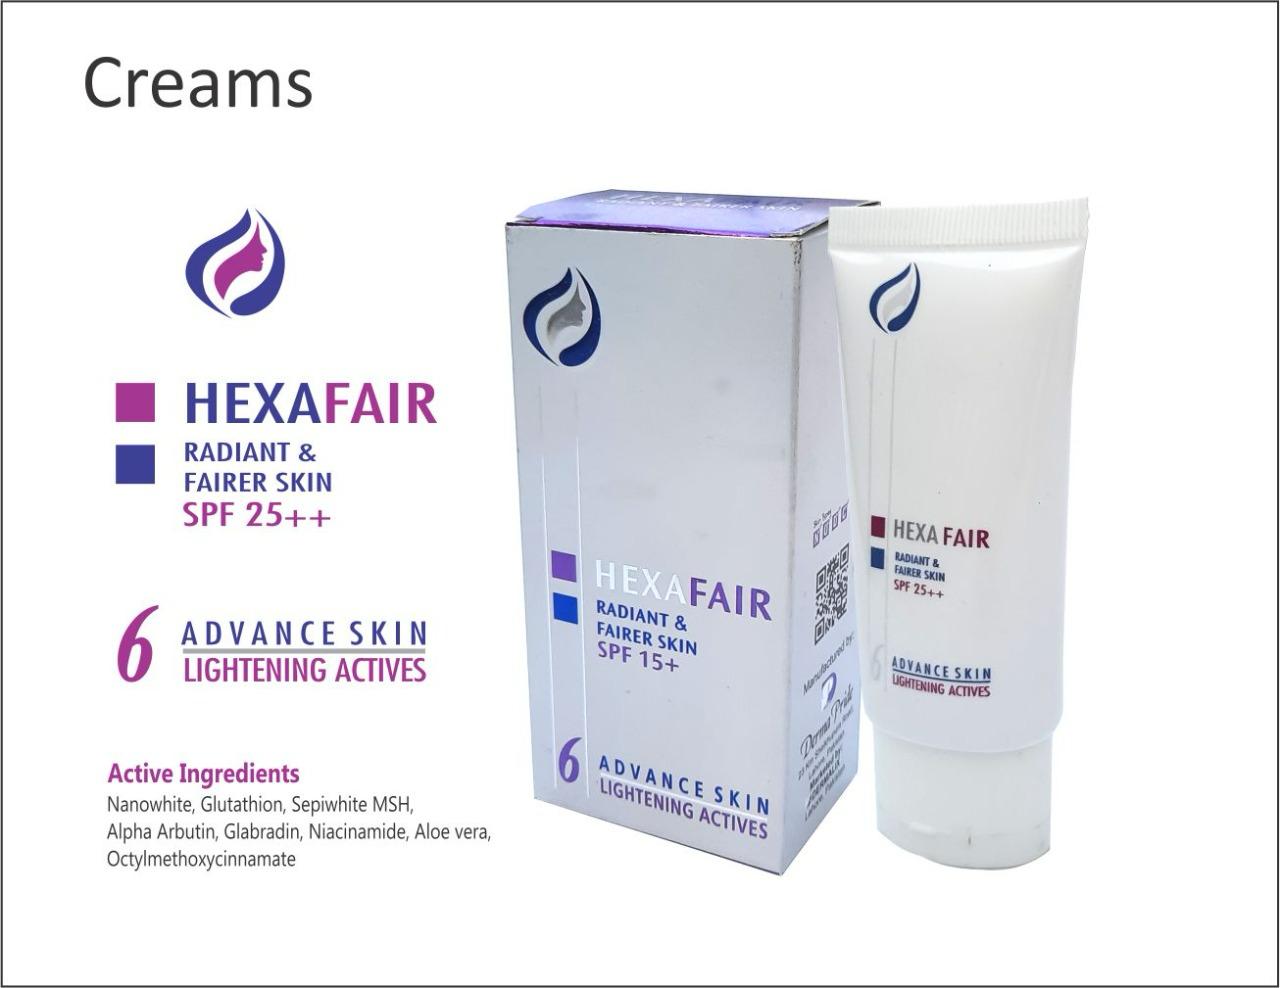 Hexafair Cream